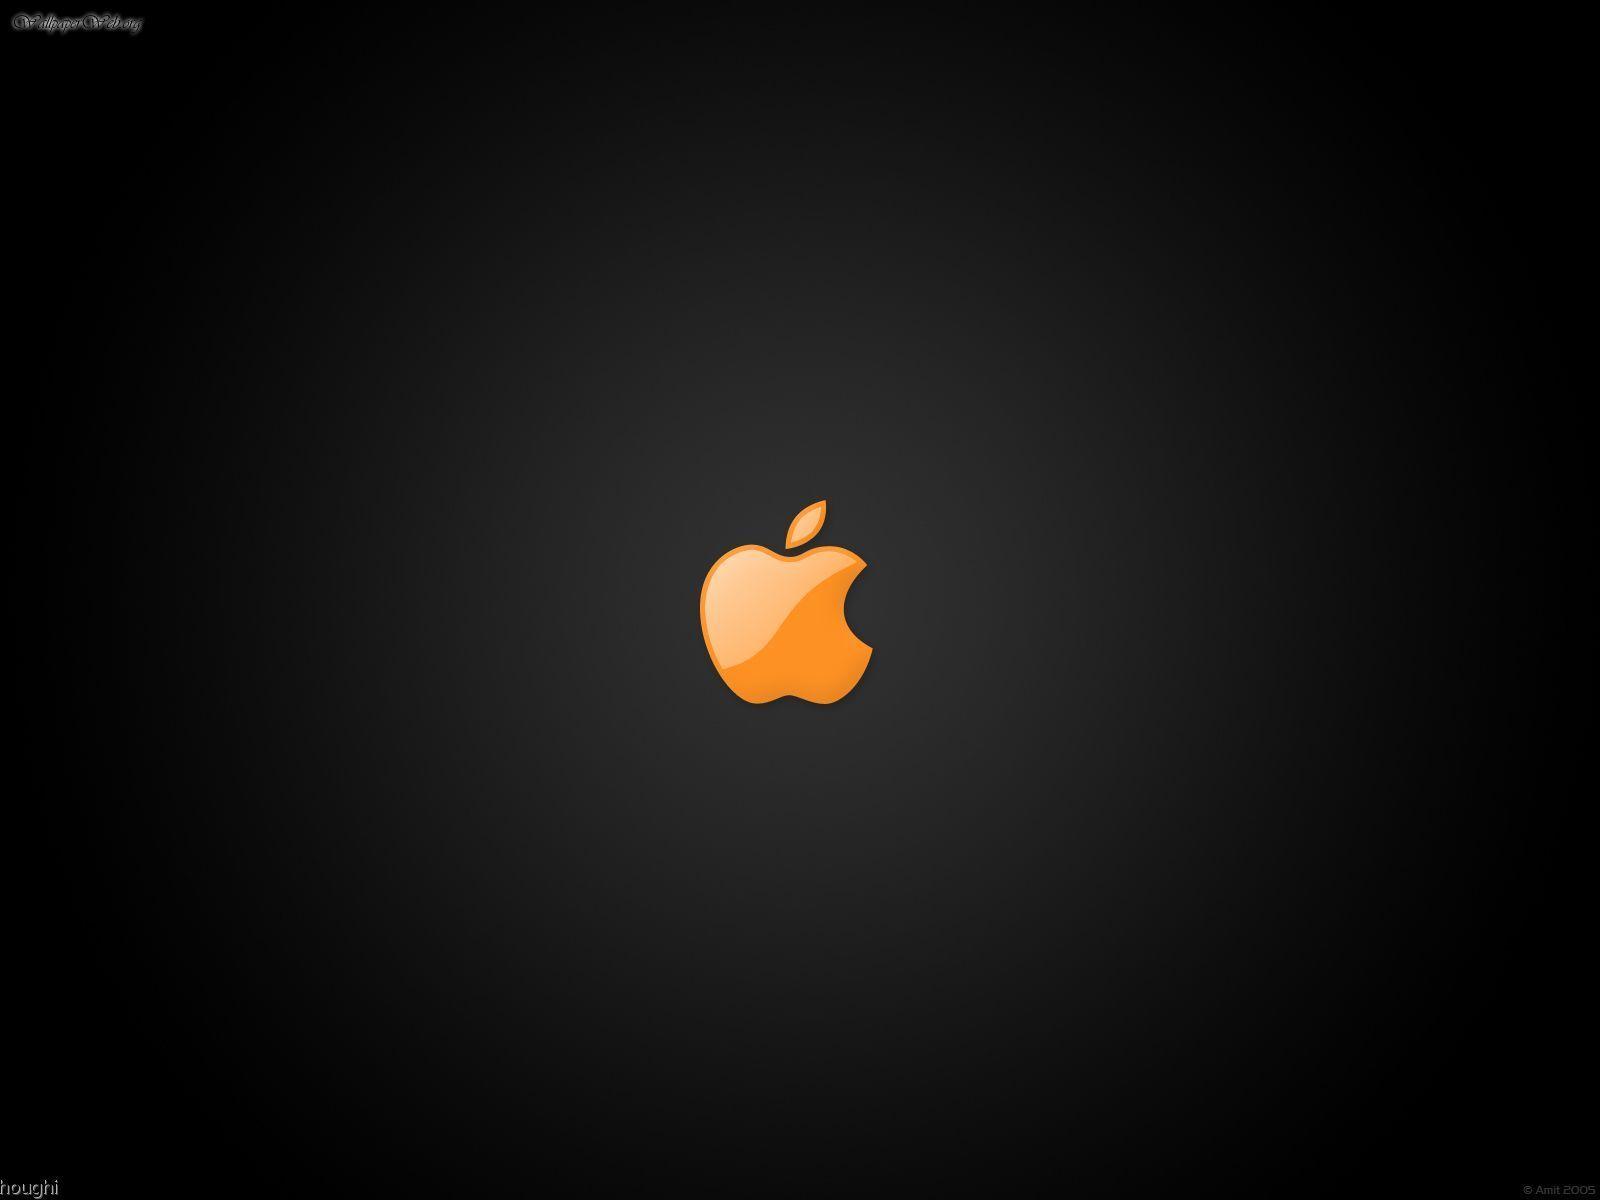 Orange Apple Logo - Computer: Apple Logo (orange), picture nr. 26352